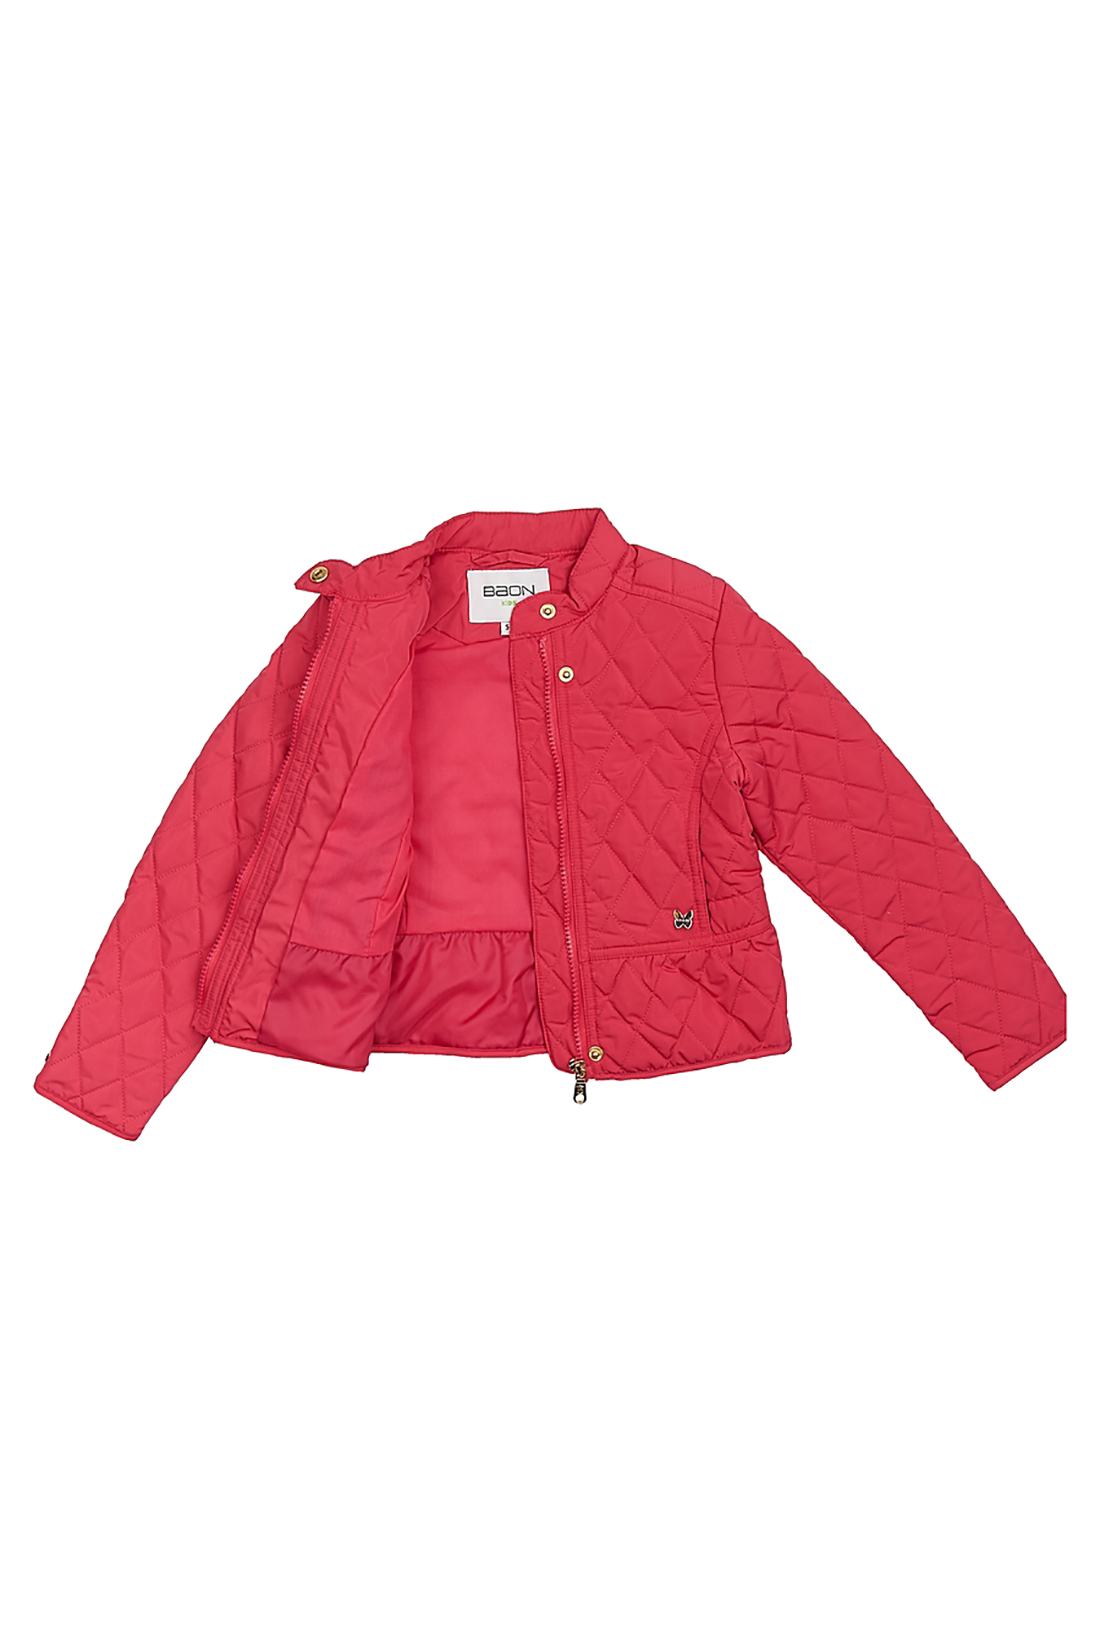 Куртка для девочки (арт. baon BK038004), размер 122-128, цвет розовый Куртка для девочки (арт. baon BK038004) - фото 3